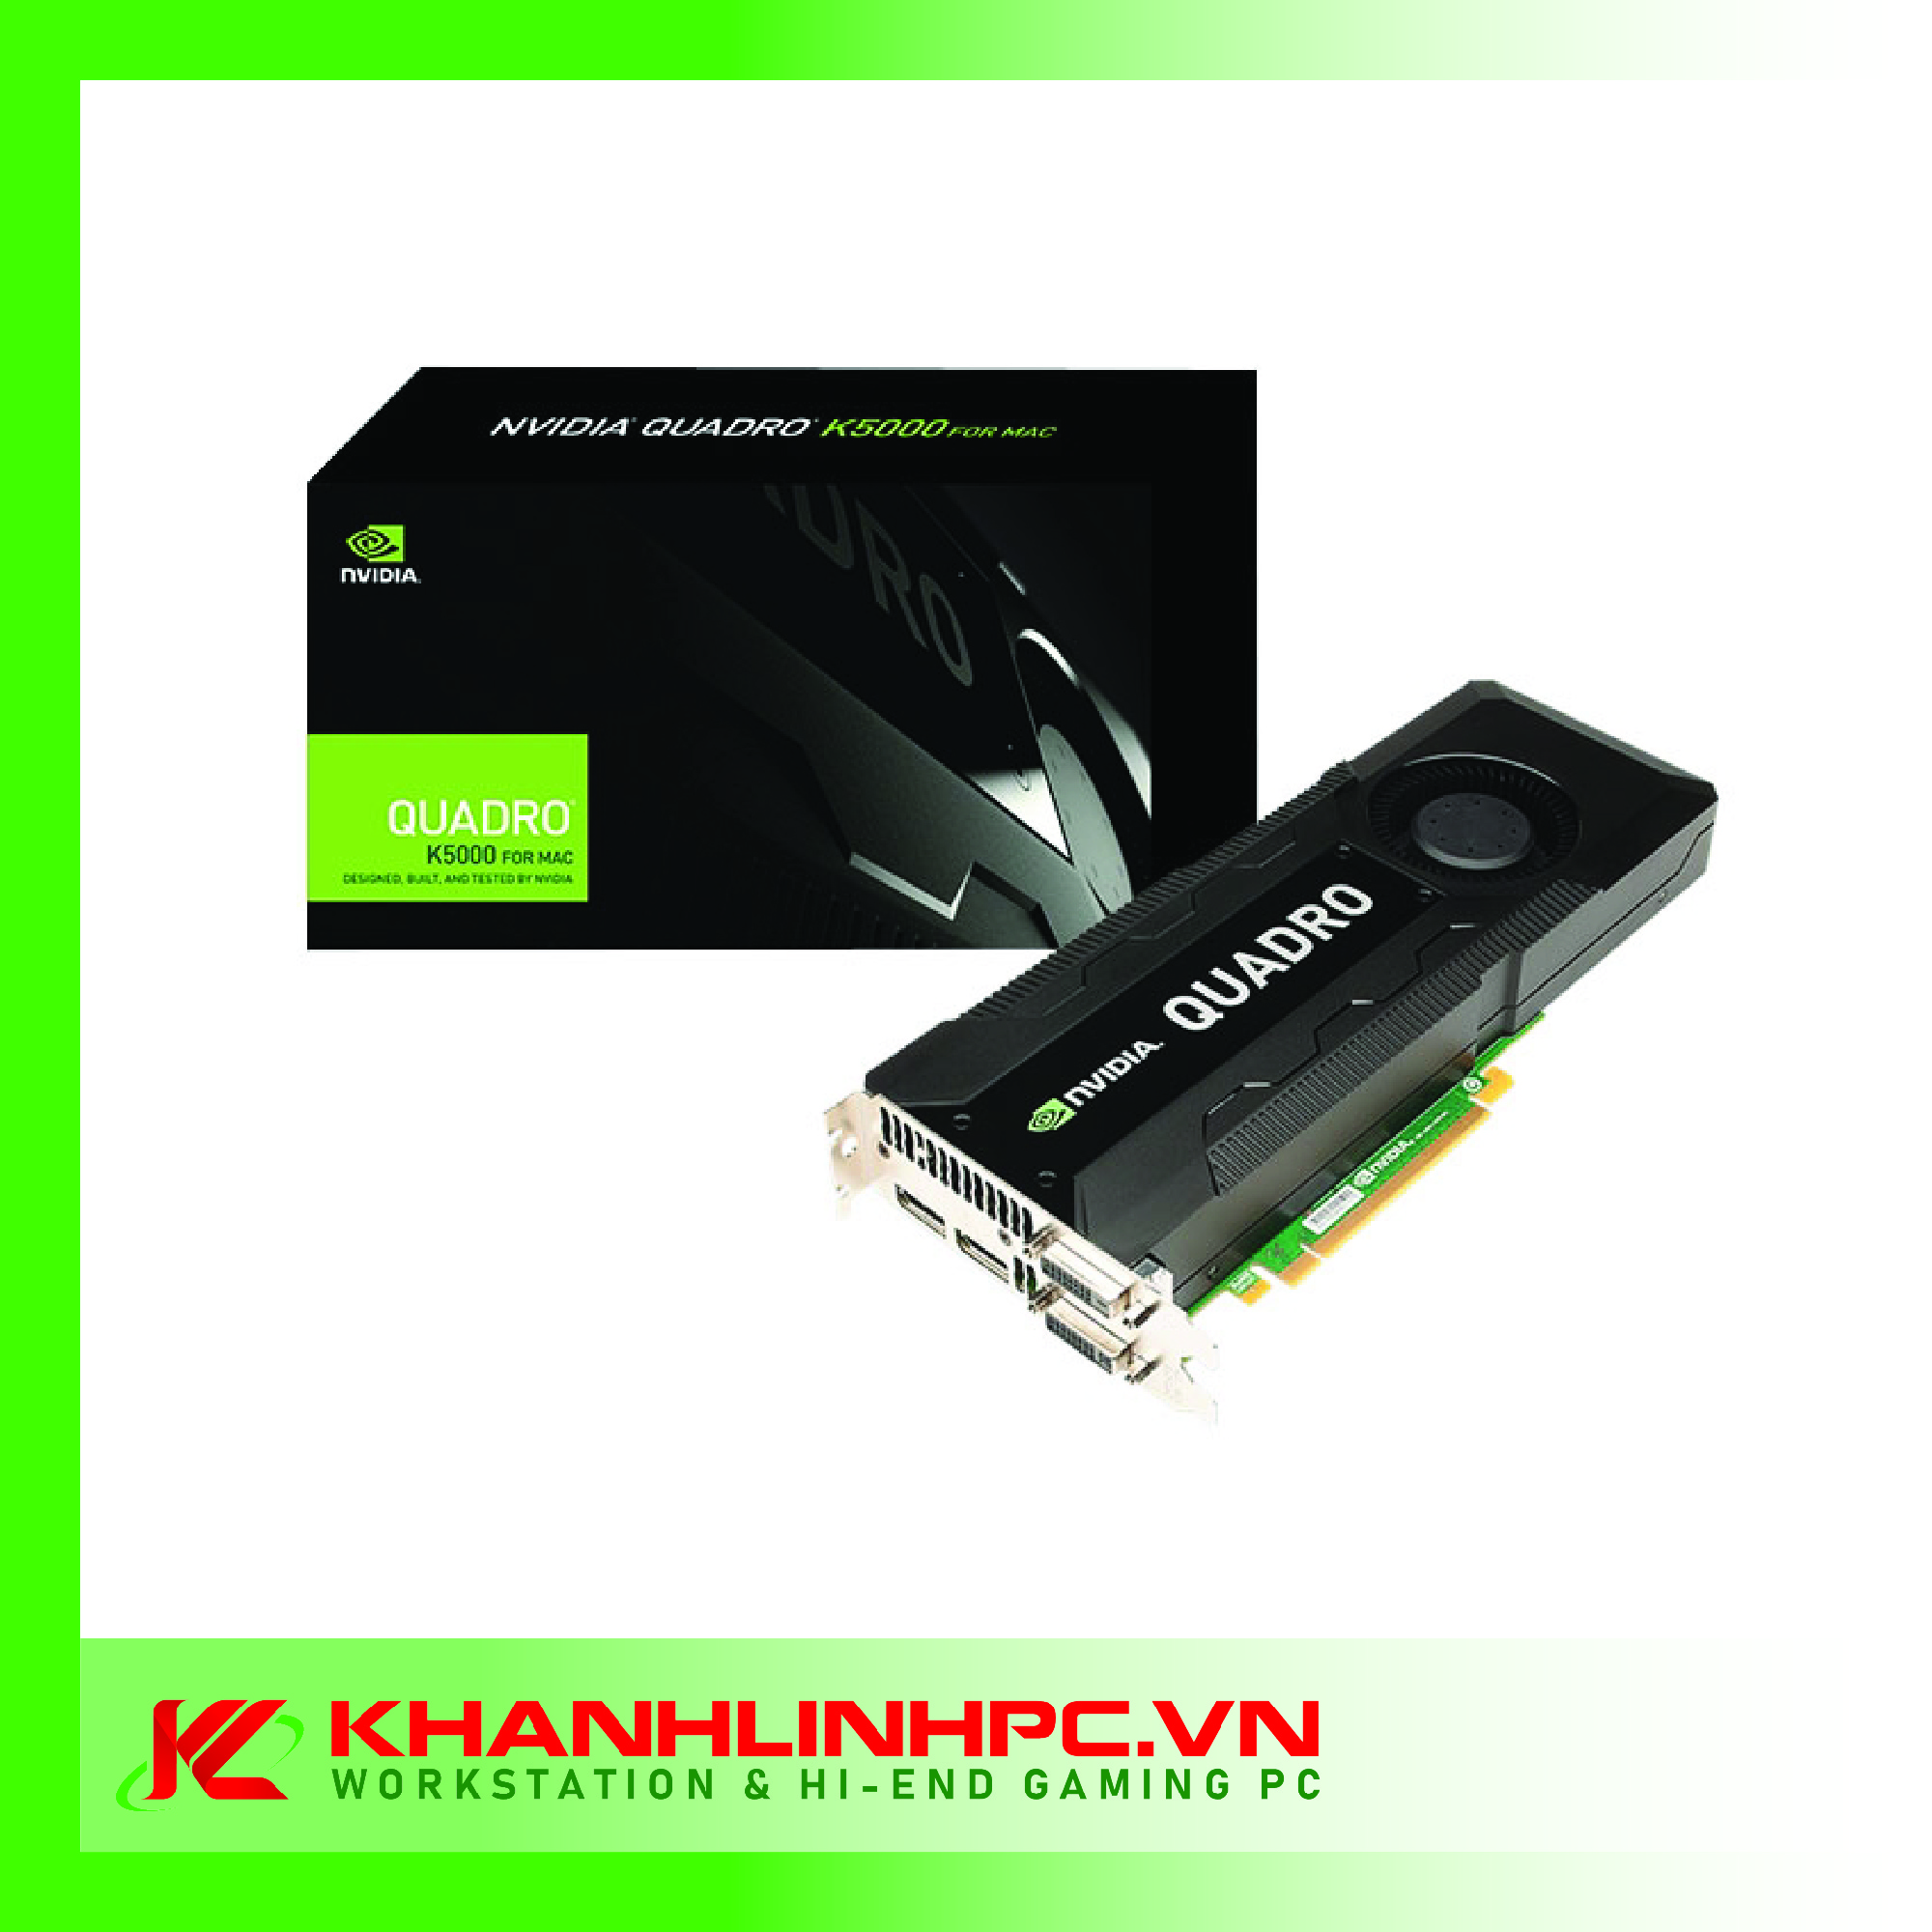 VGA CARD NVIDIA QUADRO K5000 4GB GDDR5